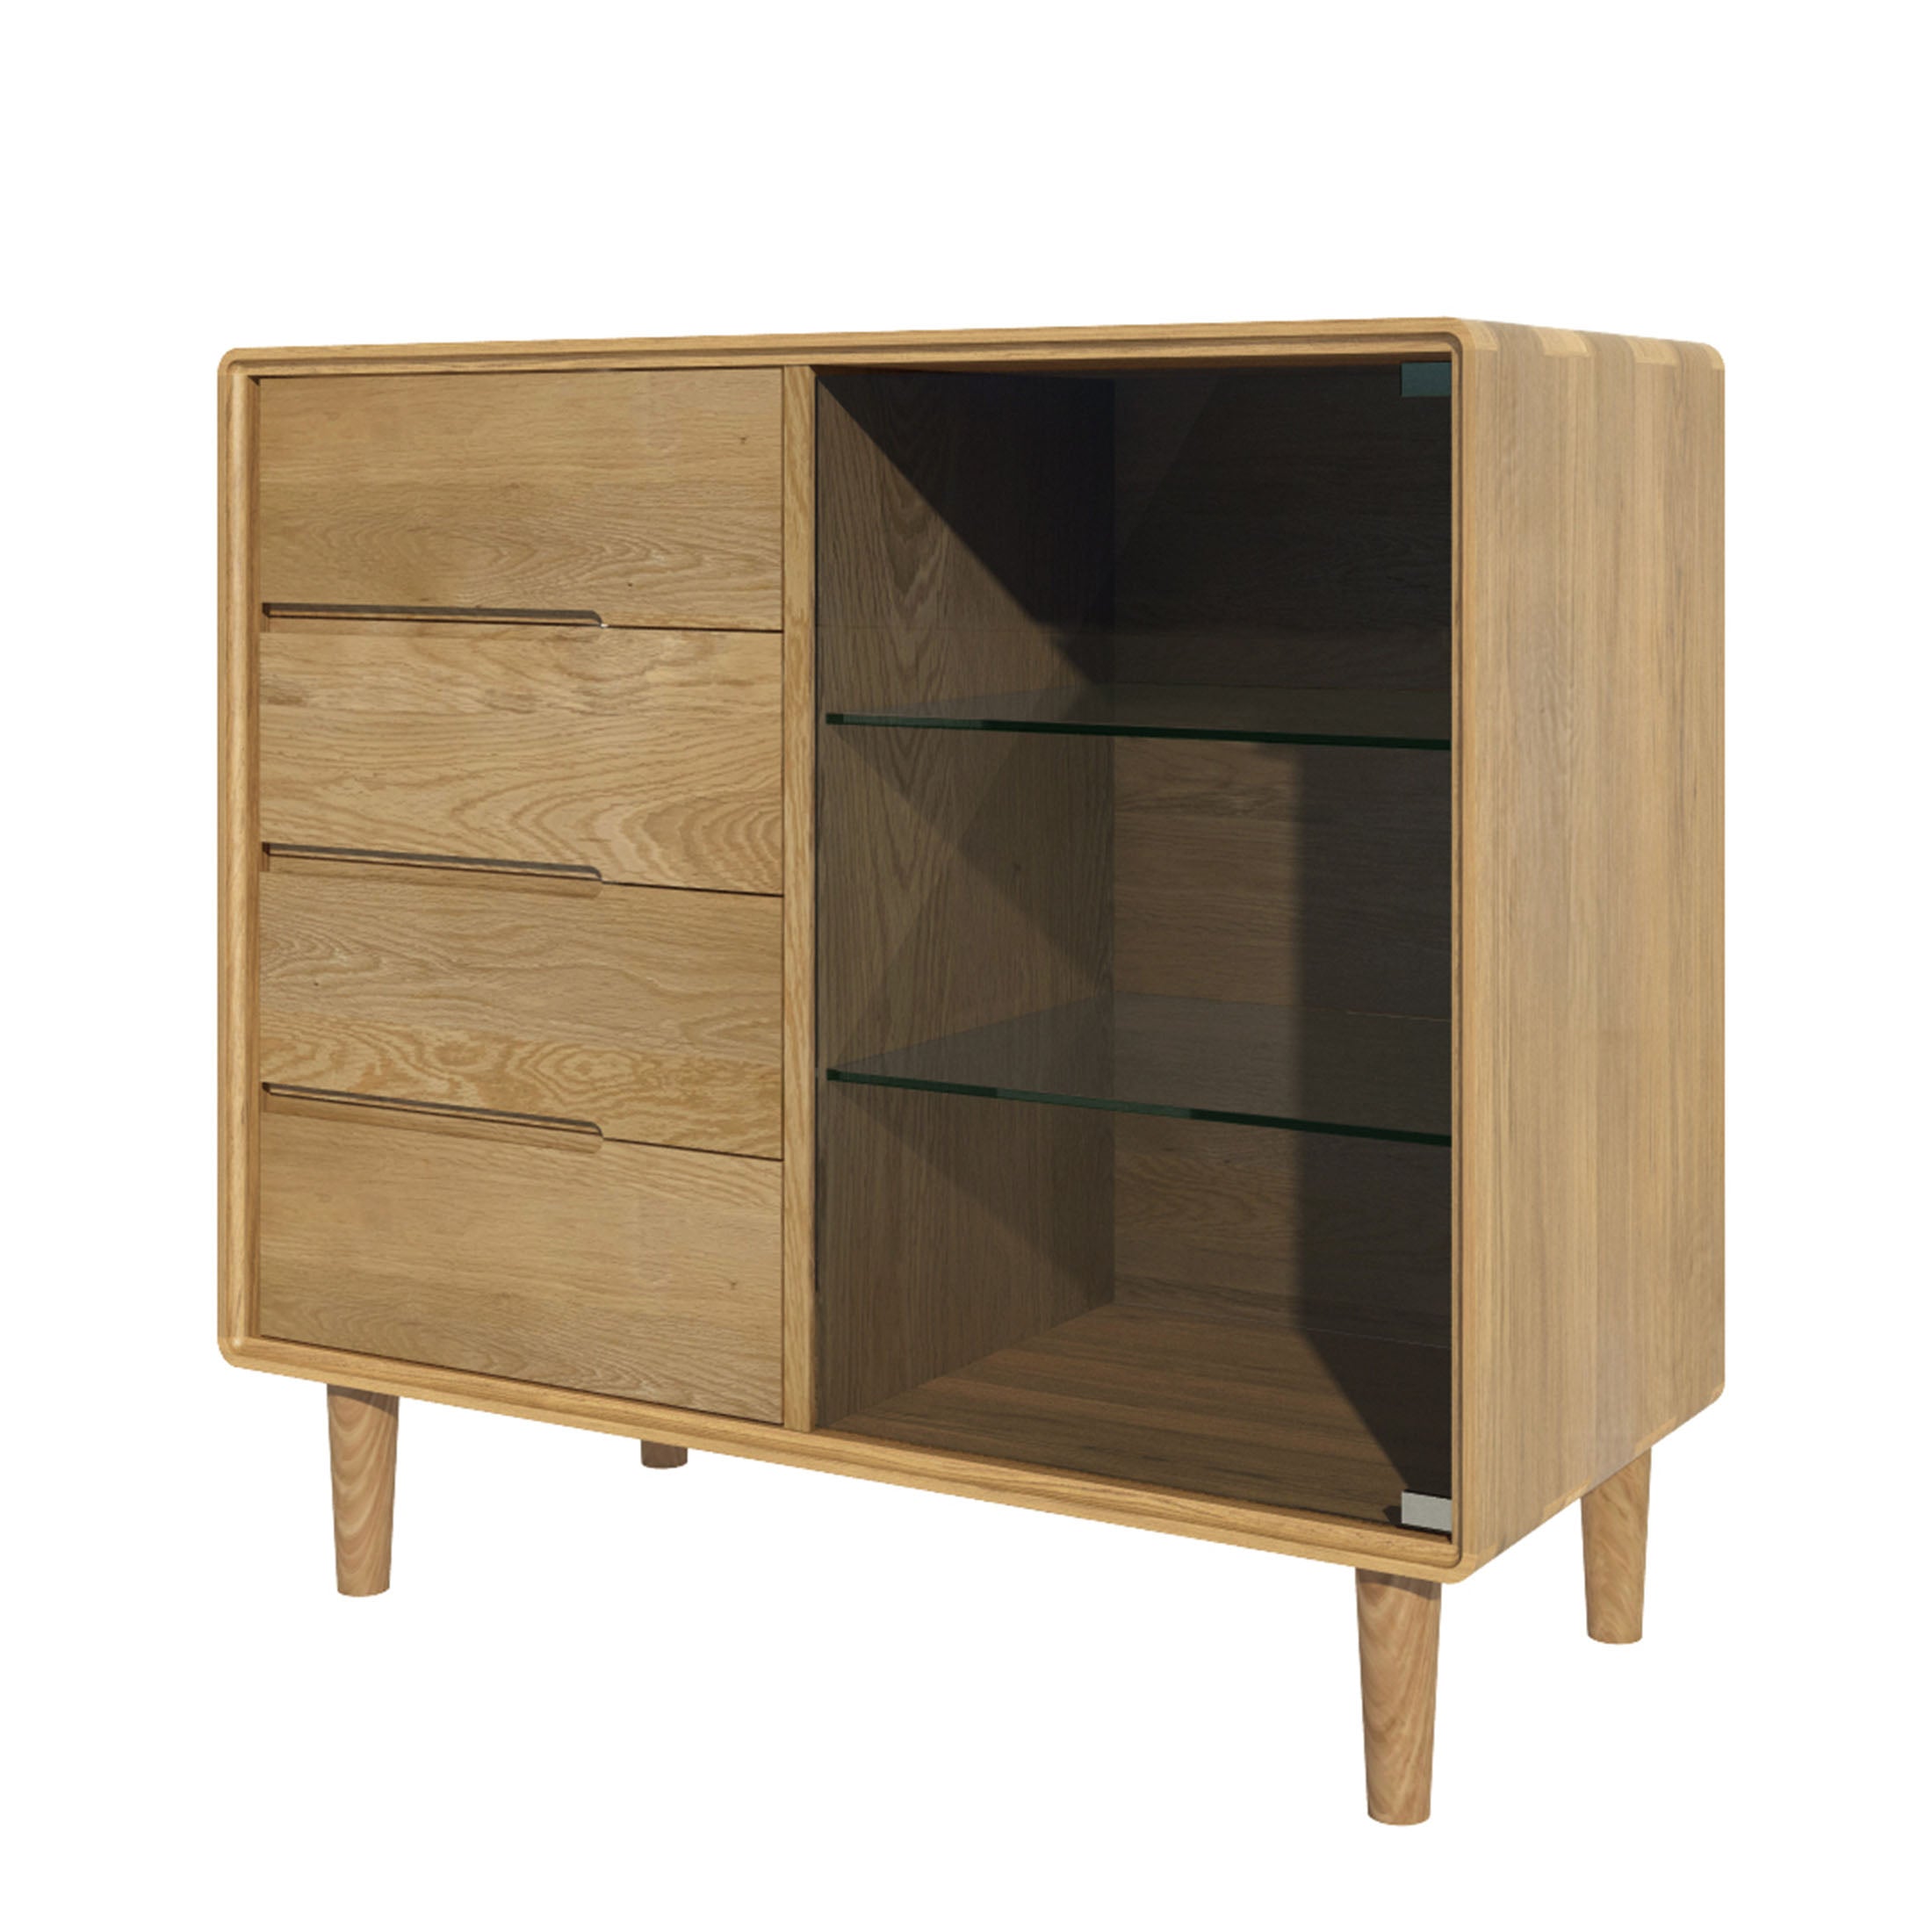 Nordic Scandic Oak Furniture small glazed chest from Top Secret Furniture